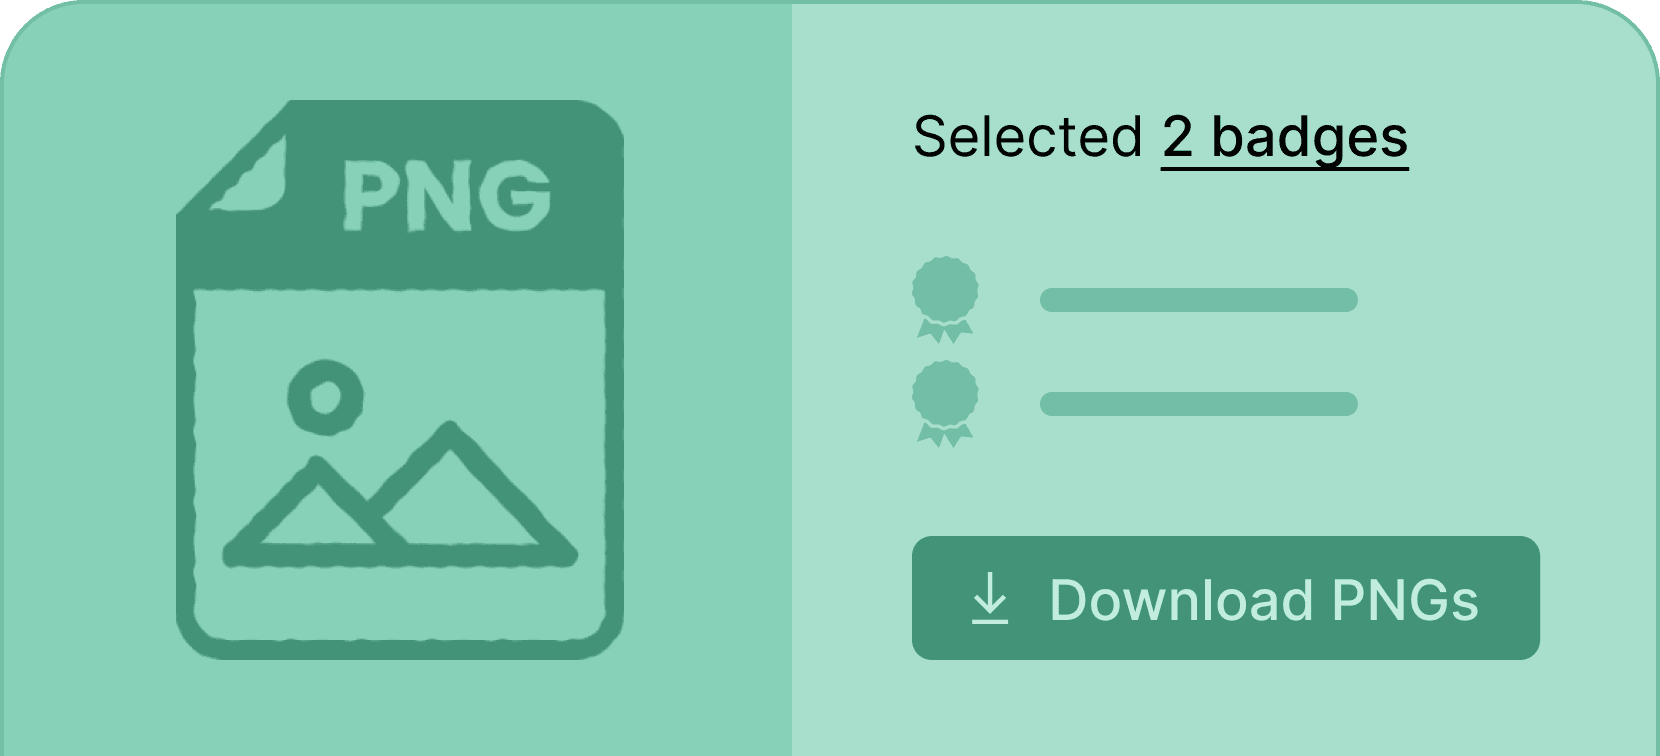 Download credential in png - Certifier features